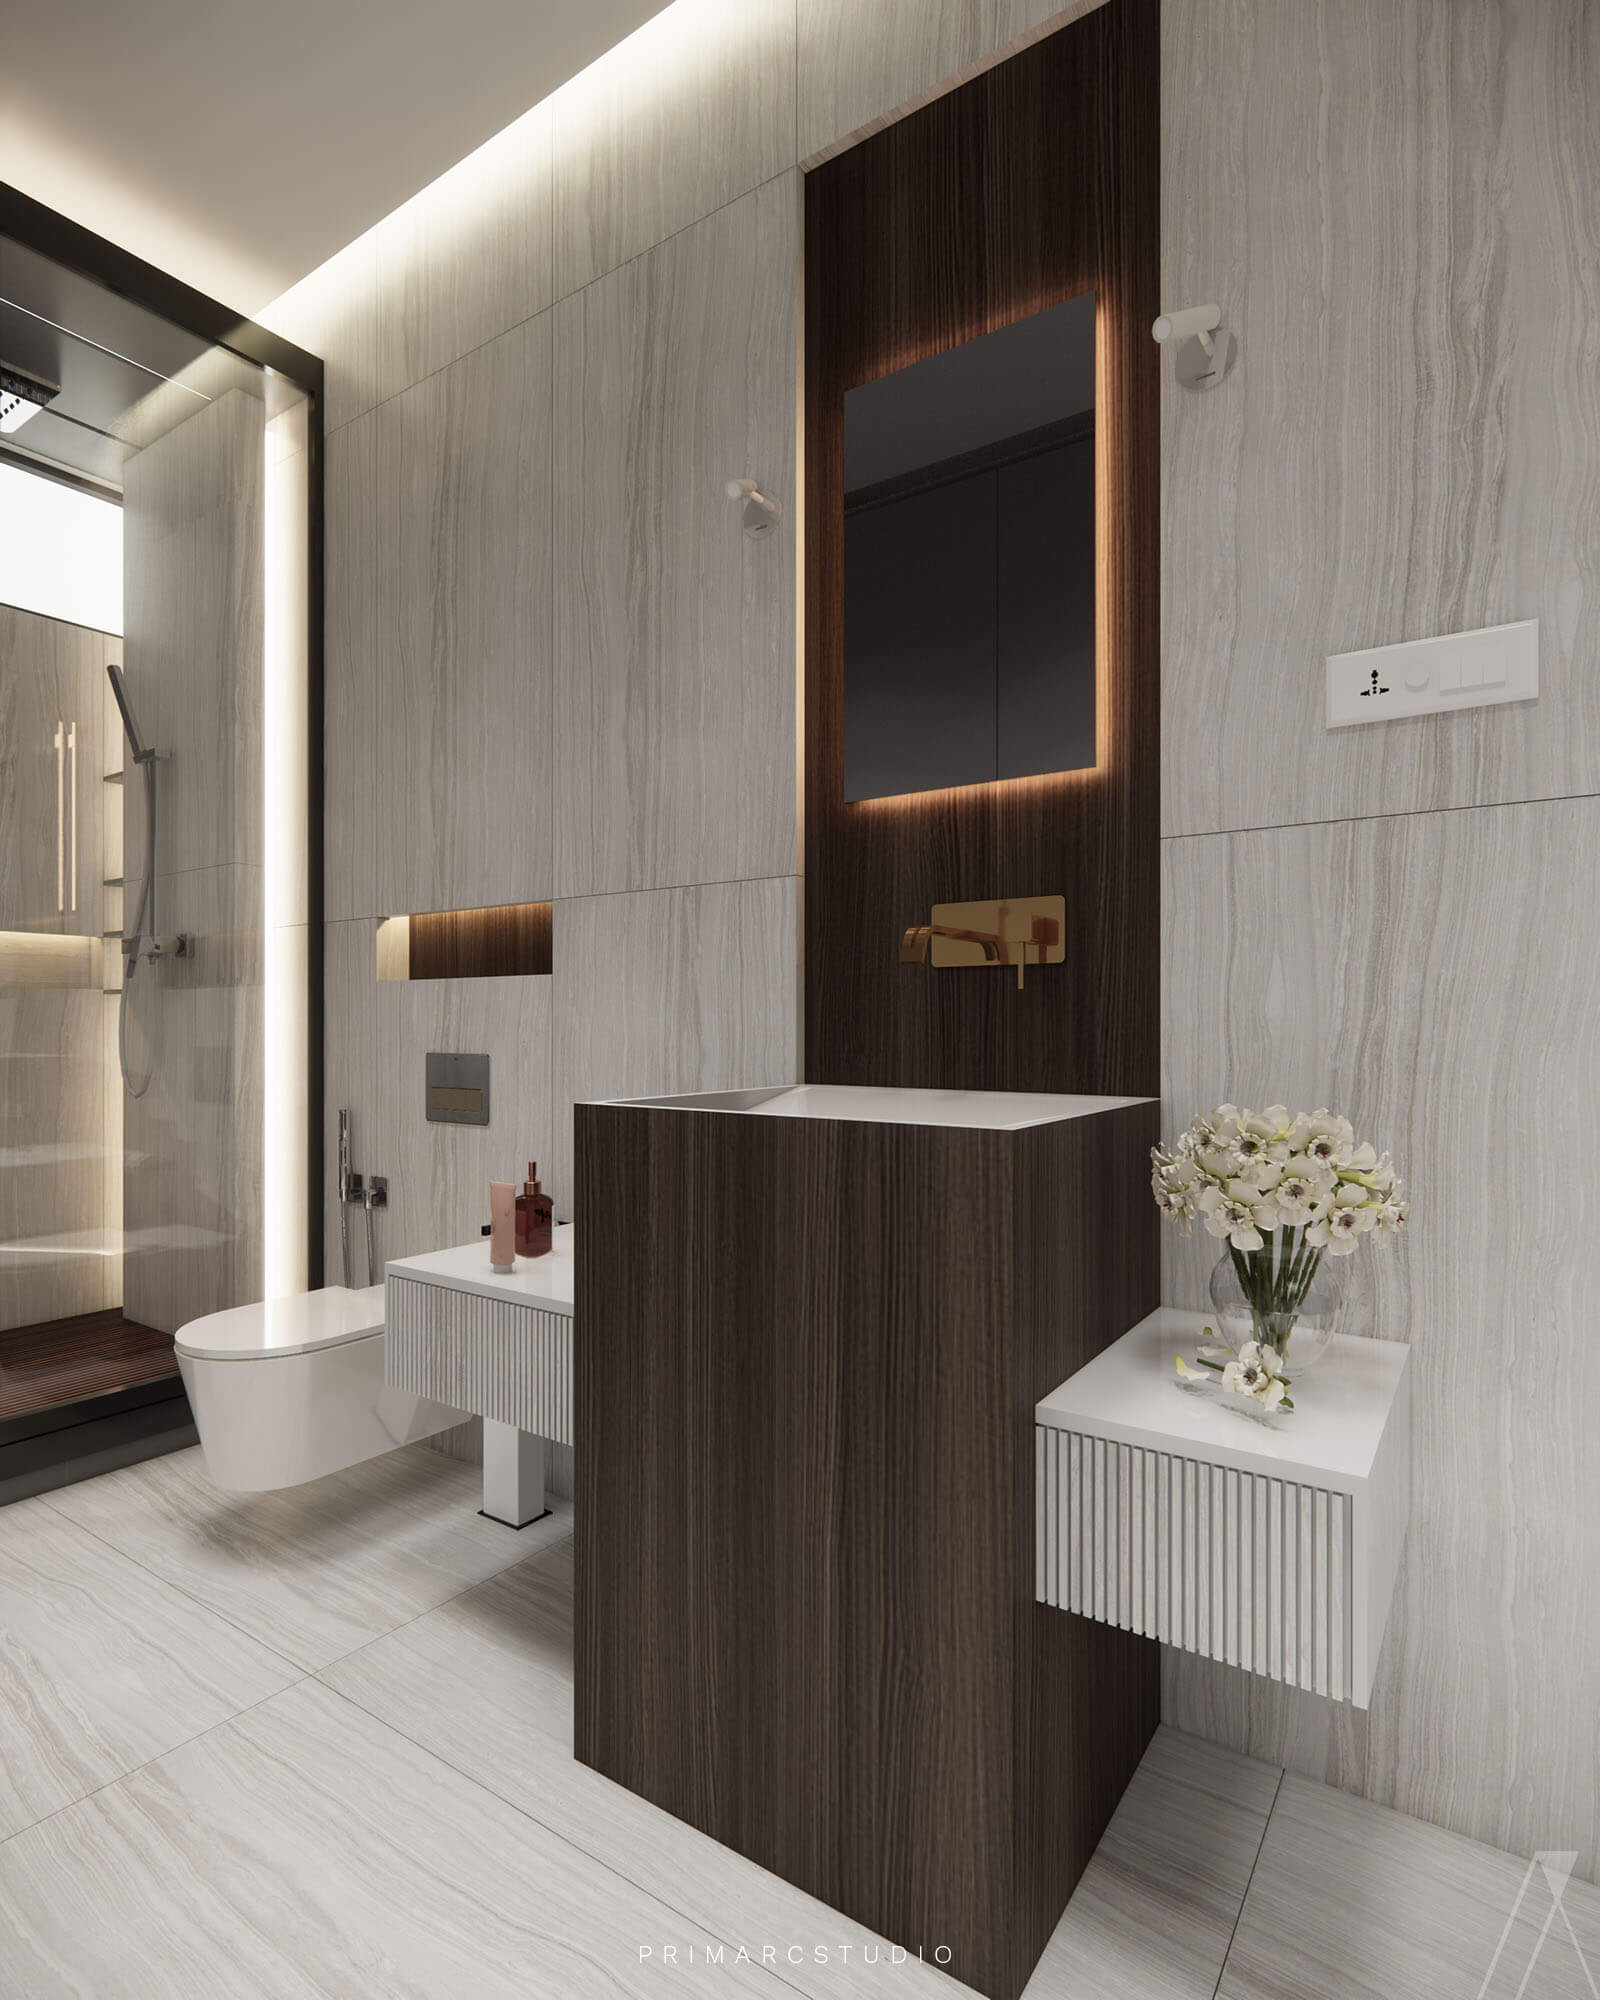 Washroom interior design in neutral colors